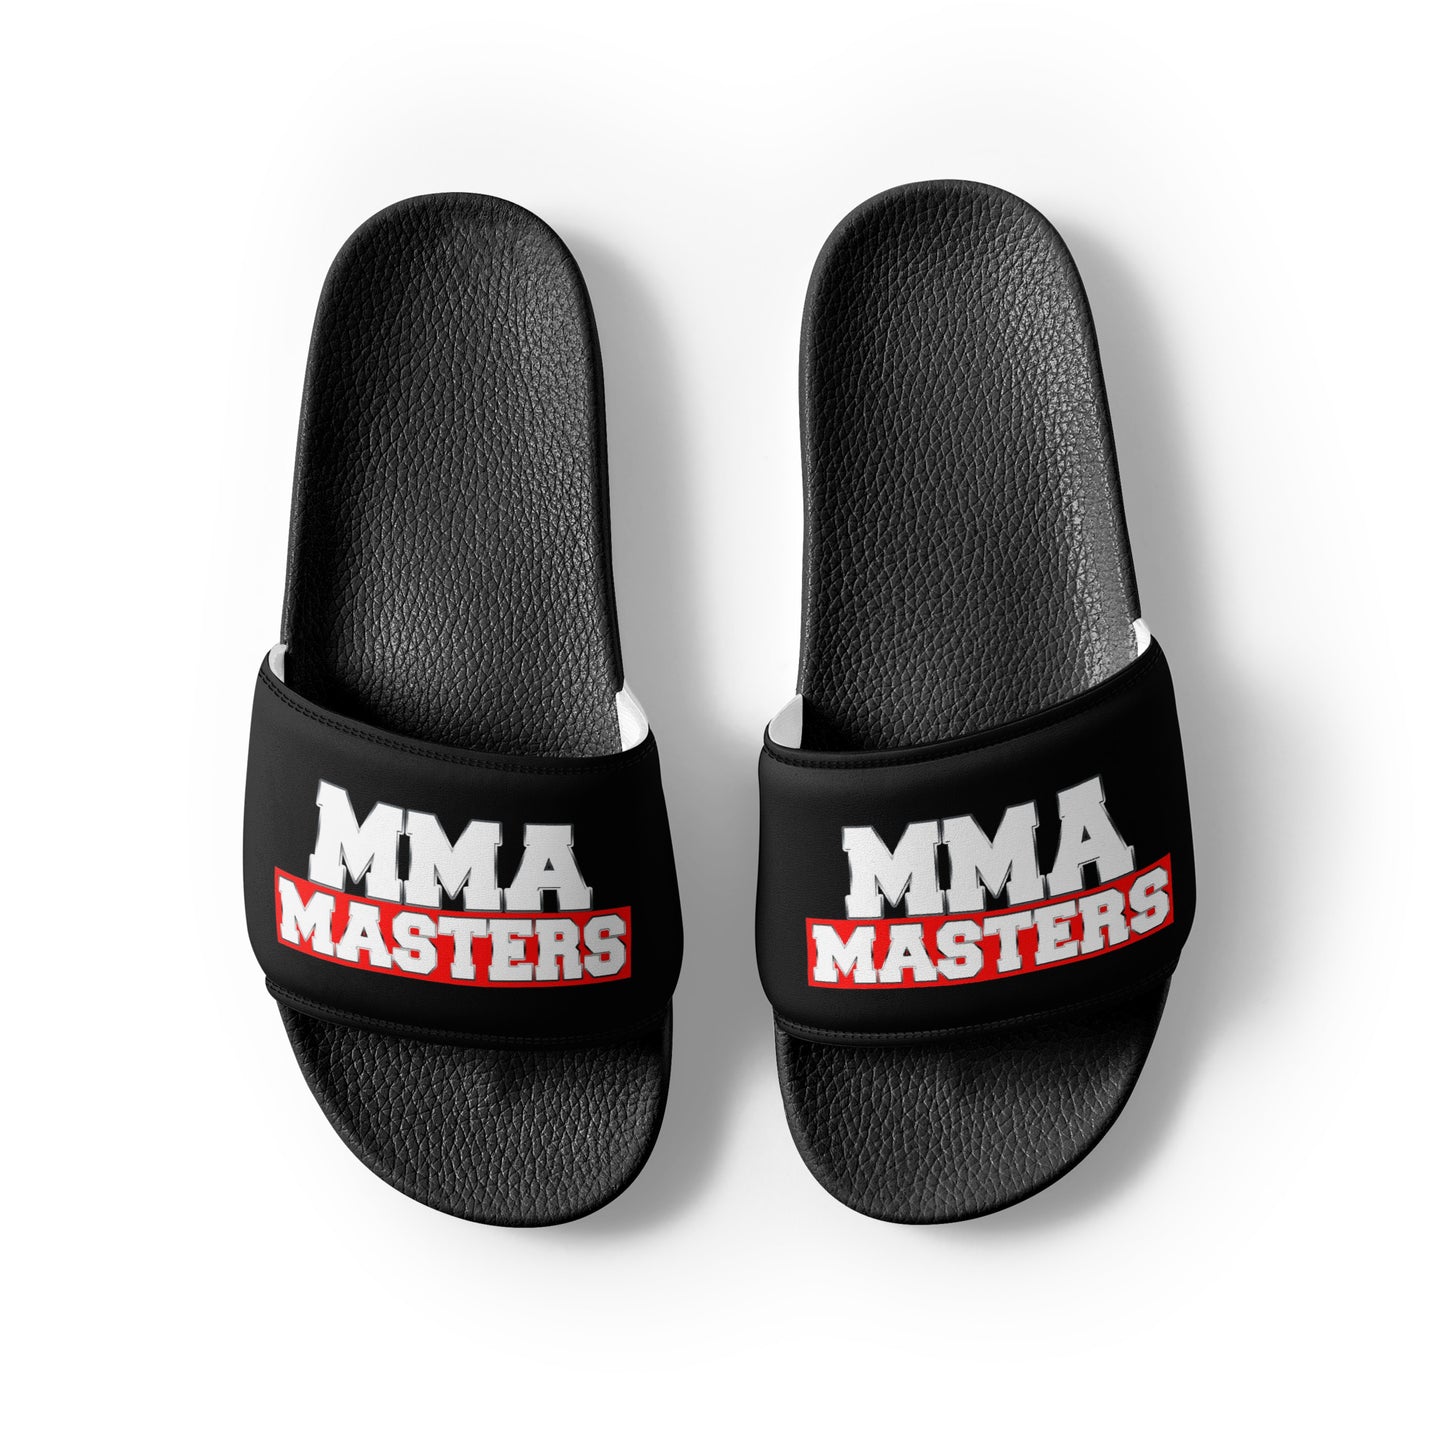 MMA MASTERS Men’s slides